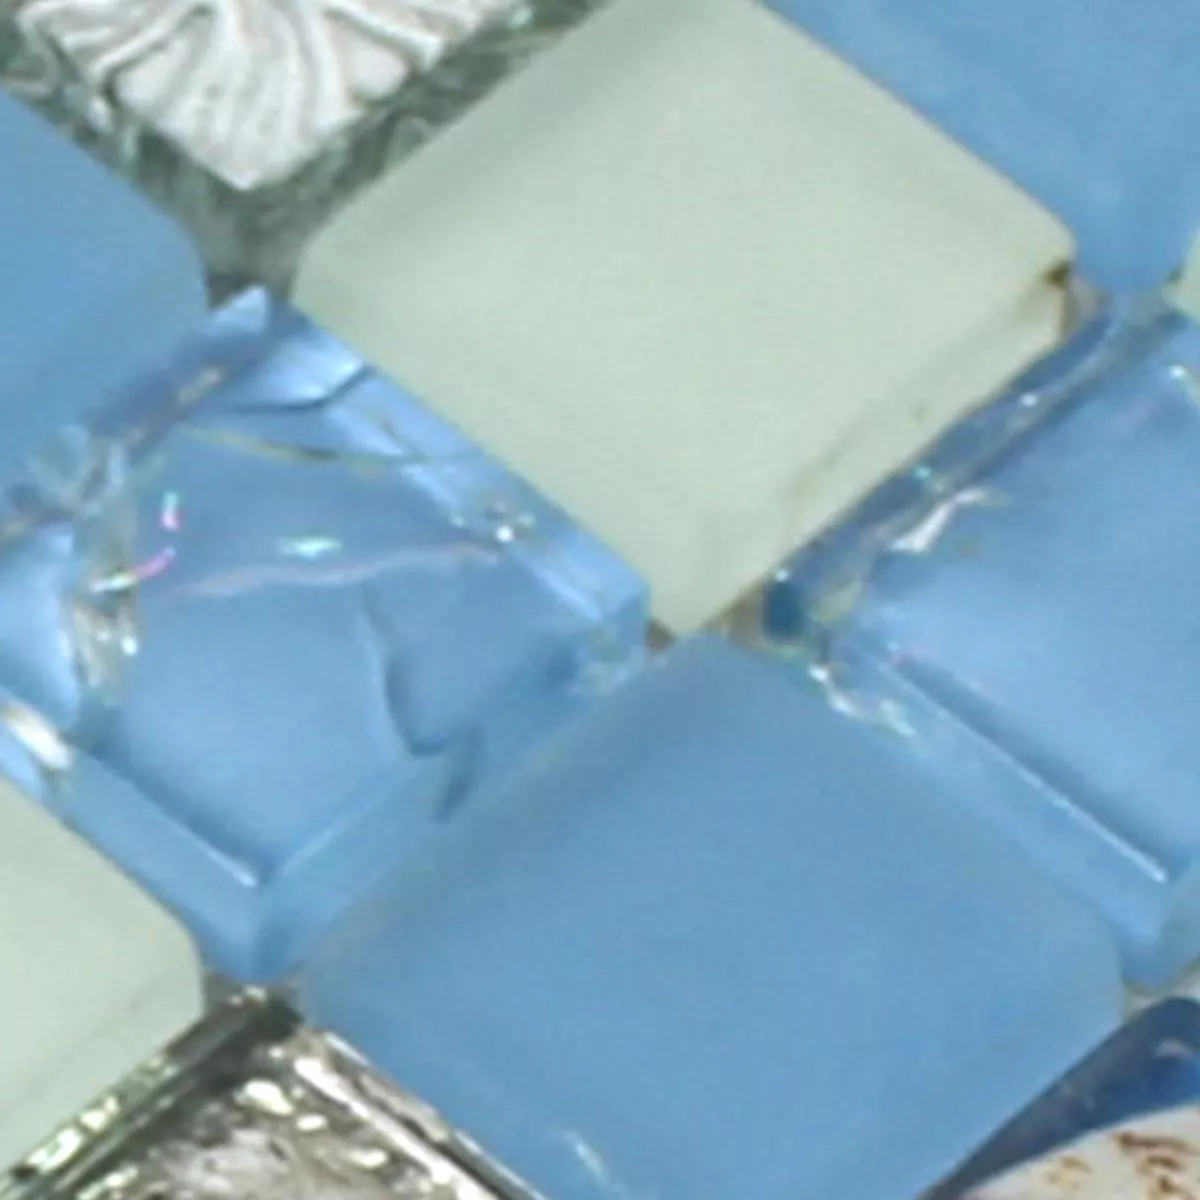 Sample Mosaic Tiles Glass Shell Blue Mix